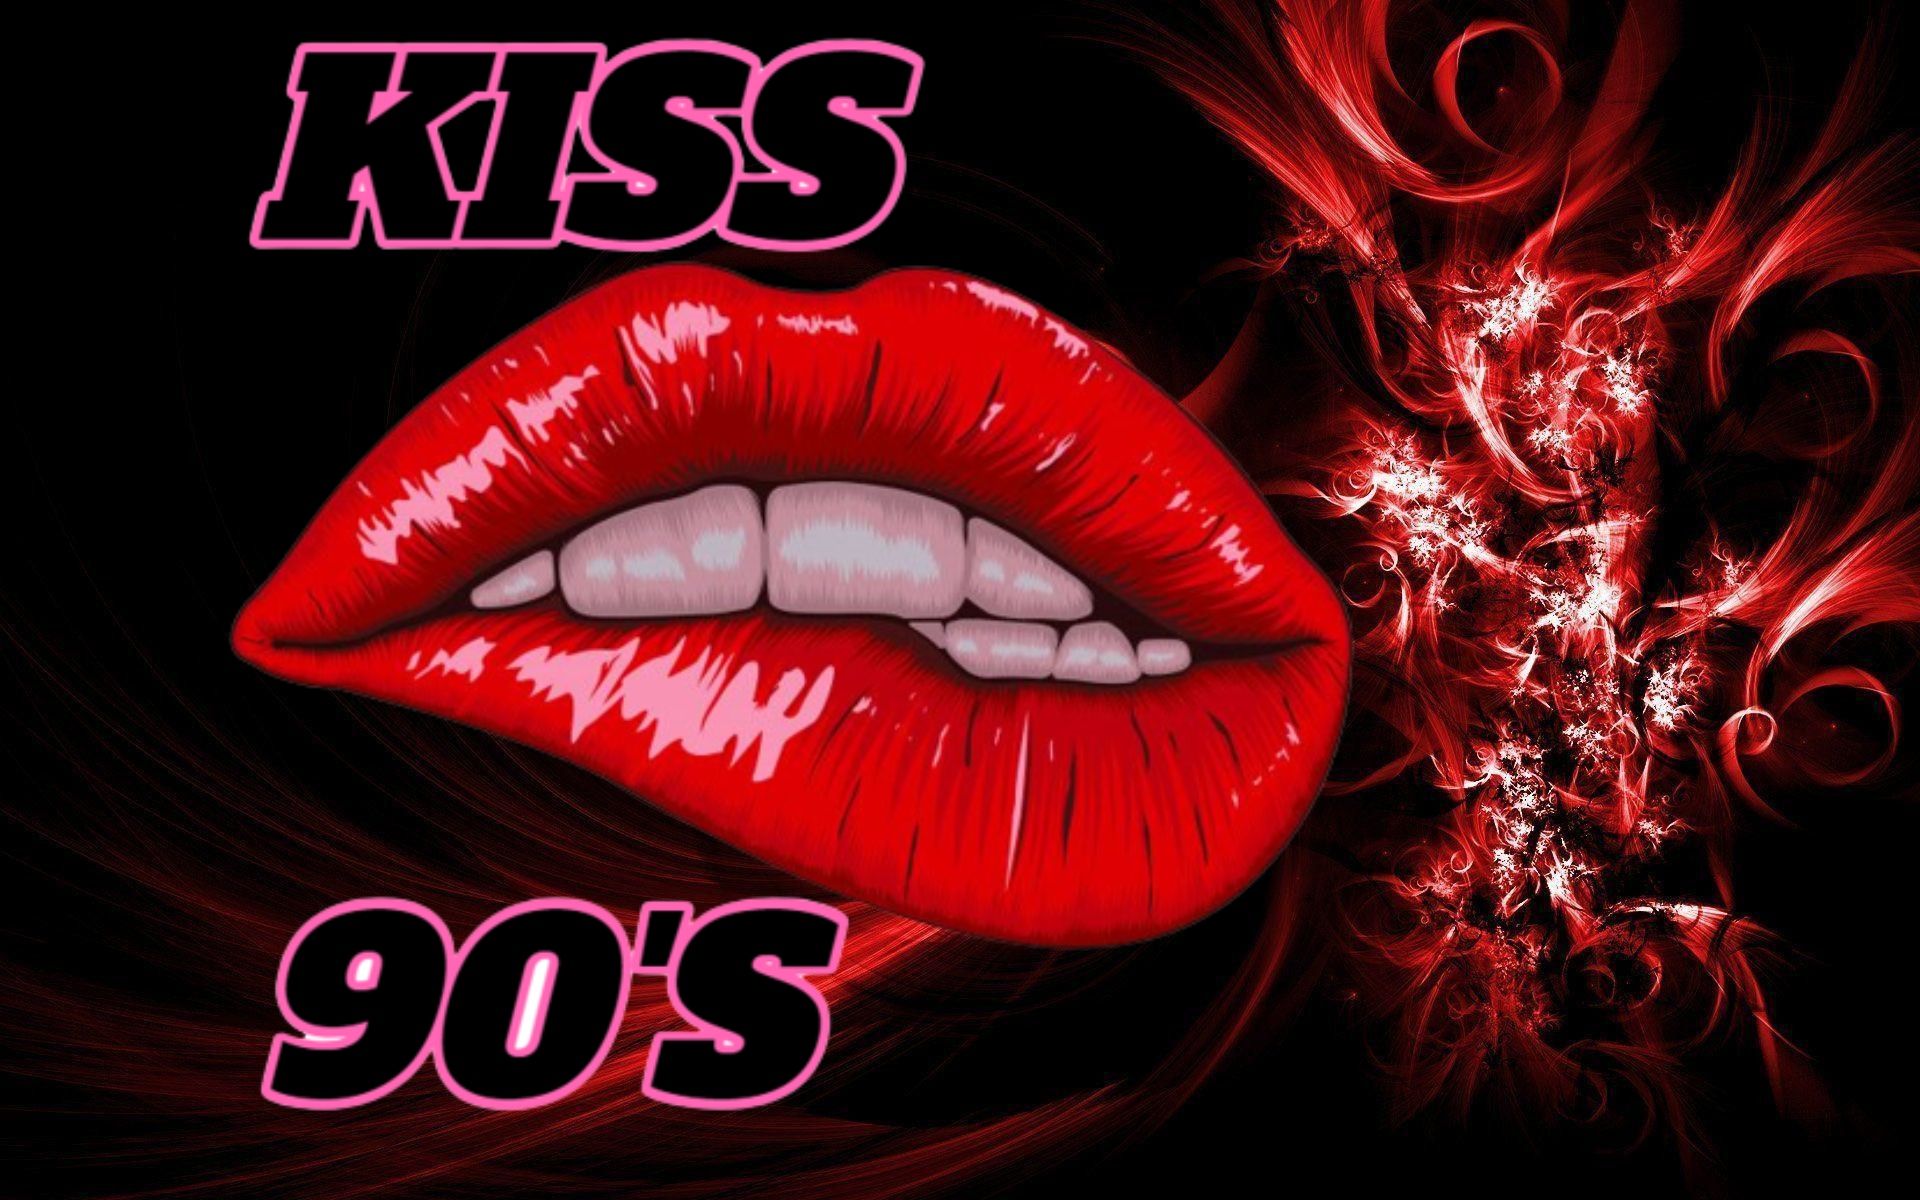 Raid kiss 90's